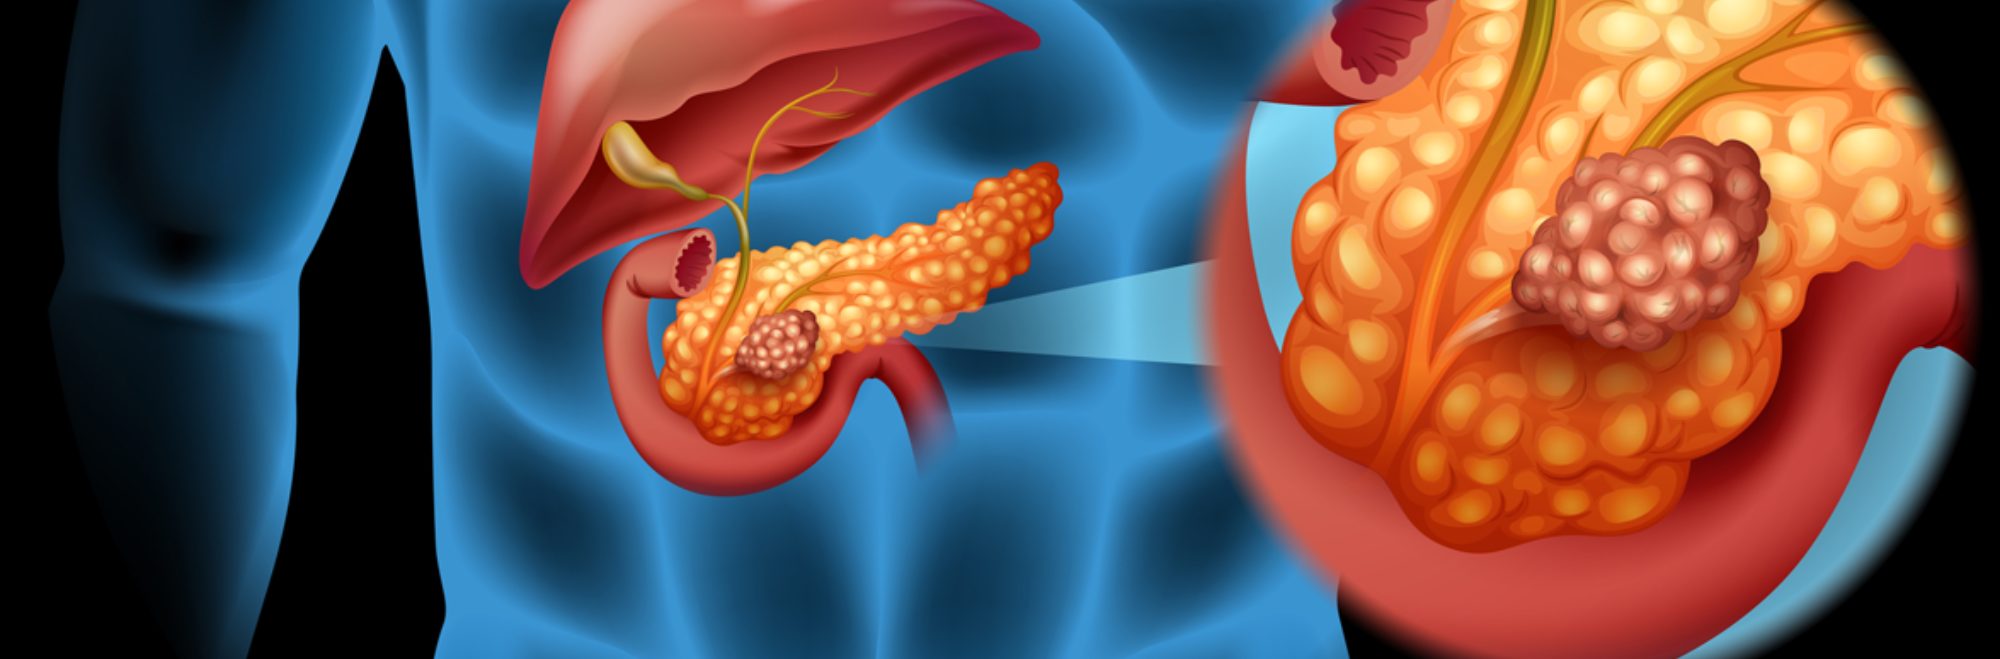 Pancreas cancer illustration